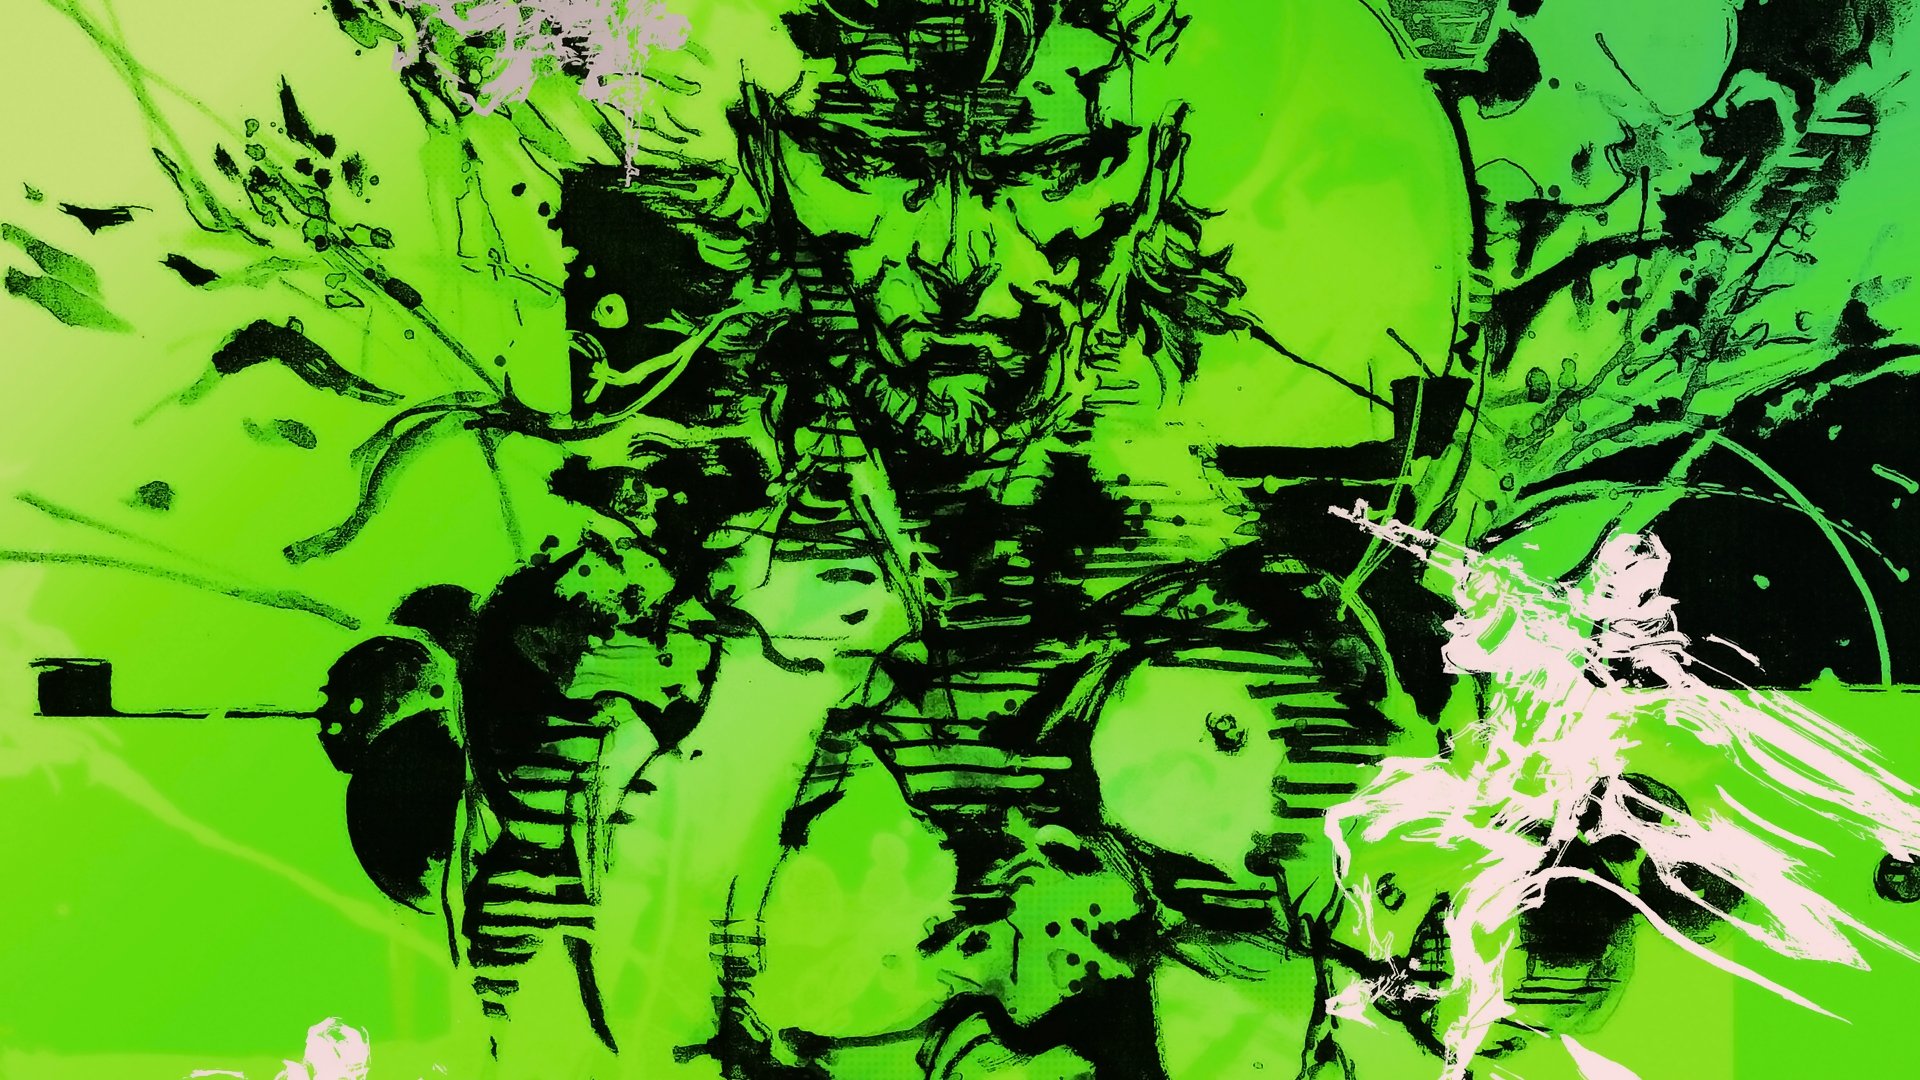 High resolution Metal Gear Solid 3: Snake Eater (MGS 3) hd 1920x1080 wallpaper ID:294564 for desktop